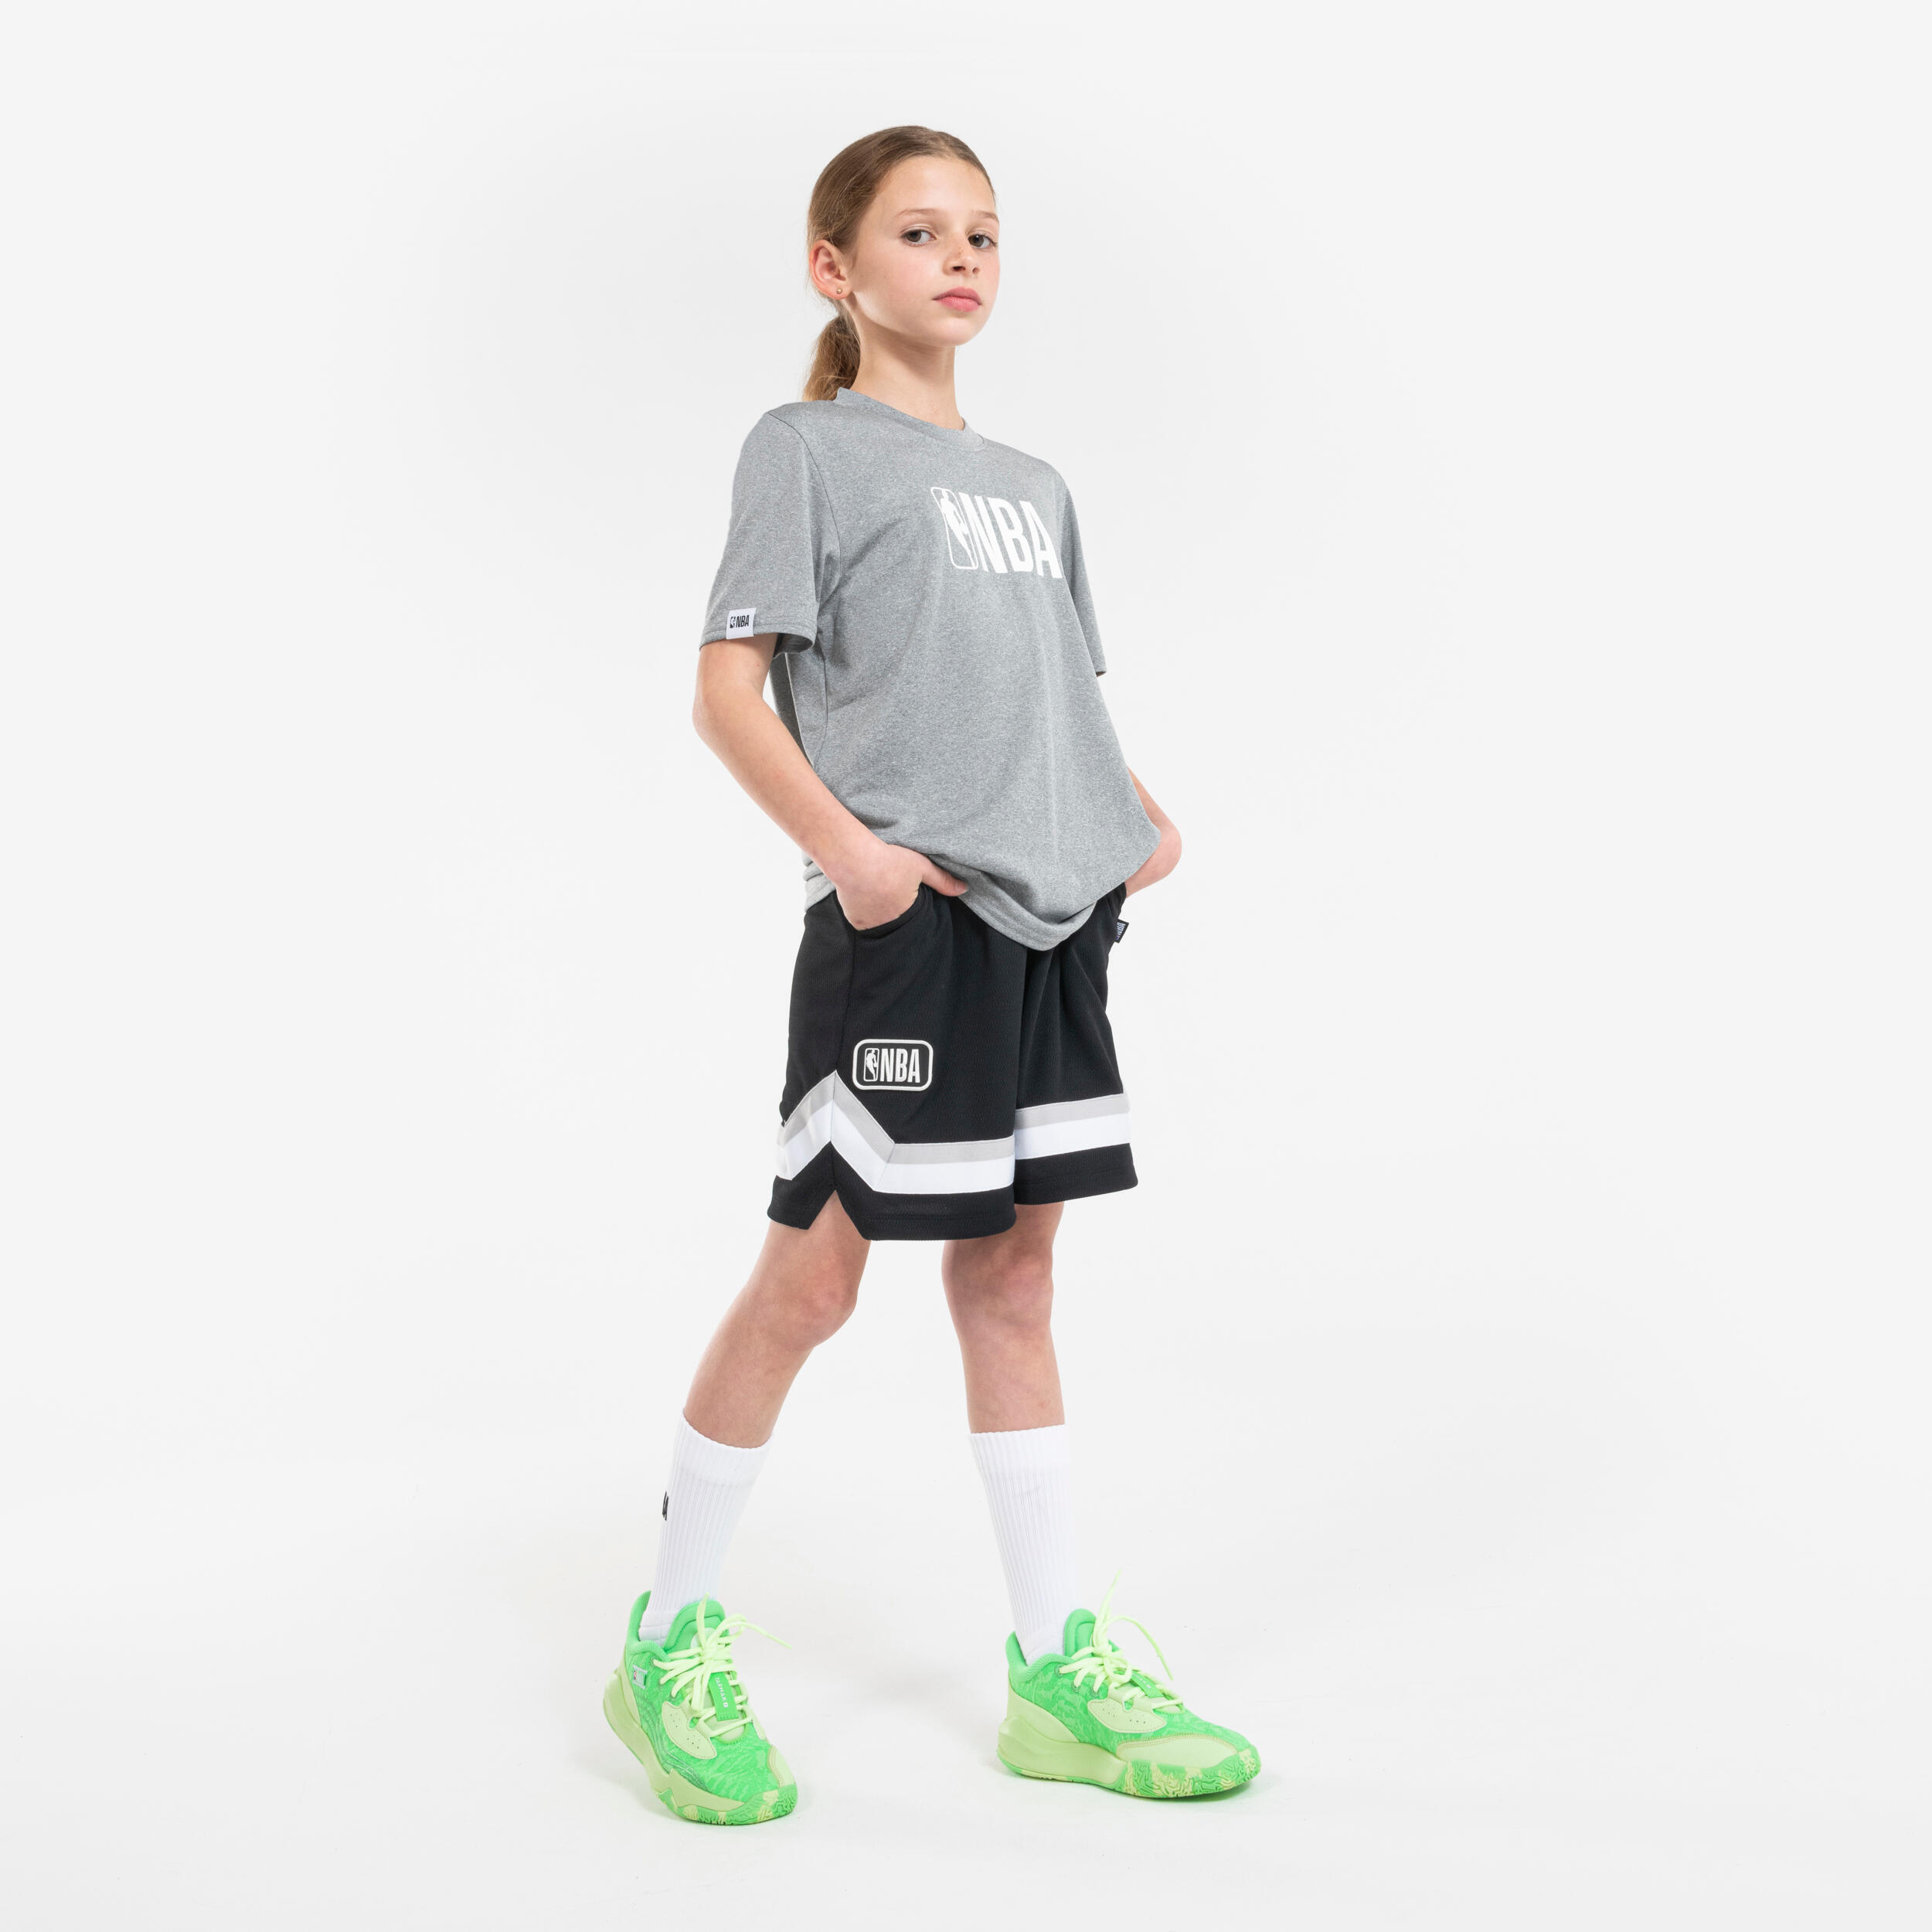 Kids' Basketball Shoes Fast 900 Low-1 - NBA Celtics/Green 9/10